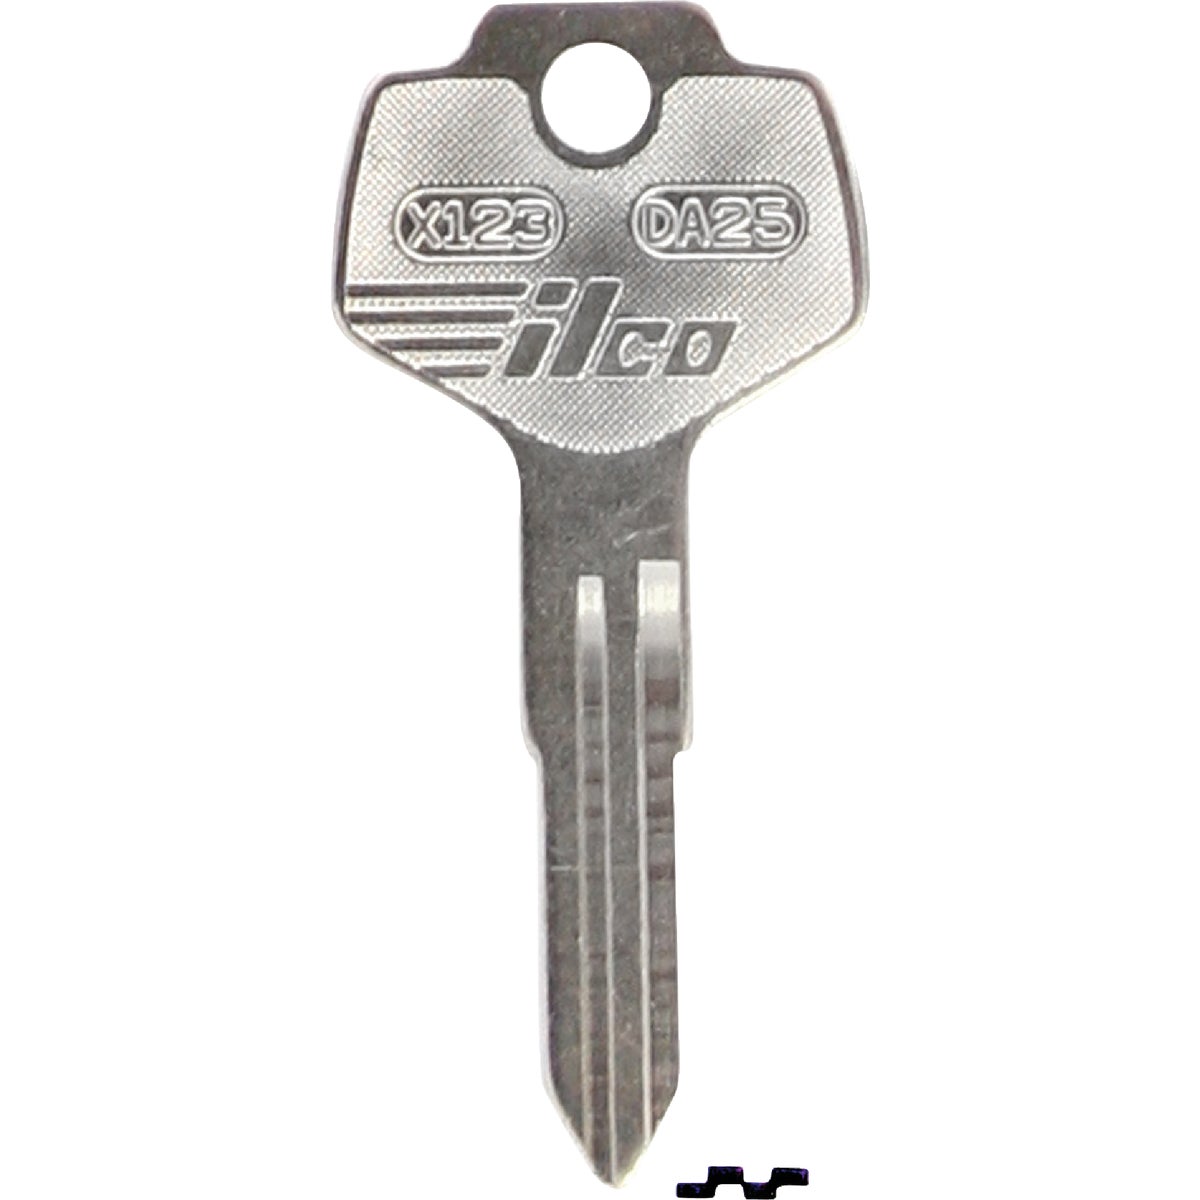 ILCO Nissan Nickel Plated Automotive Key, DA25 / X123 (10-Pack)